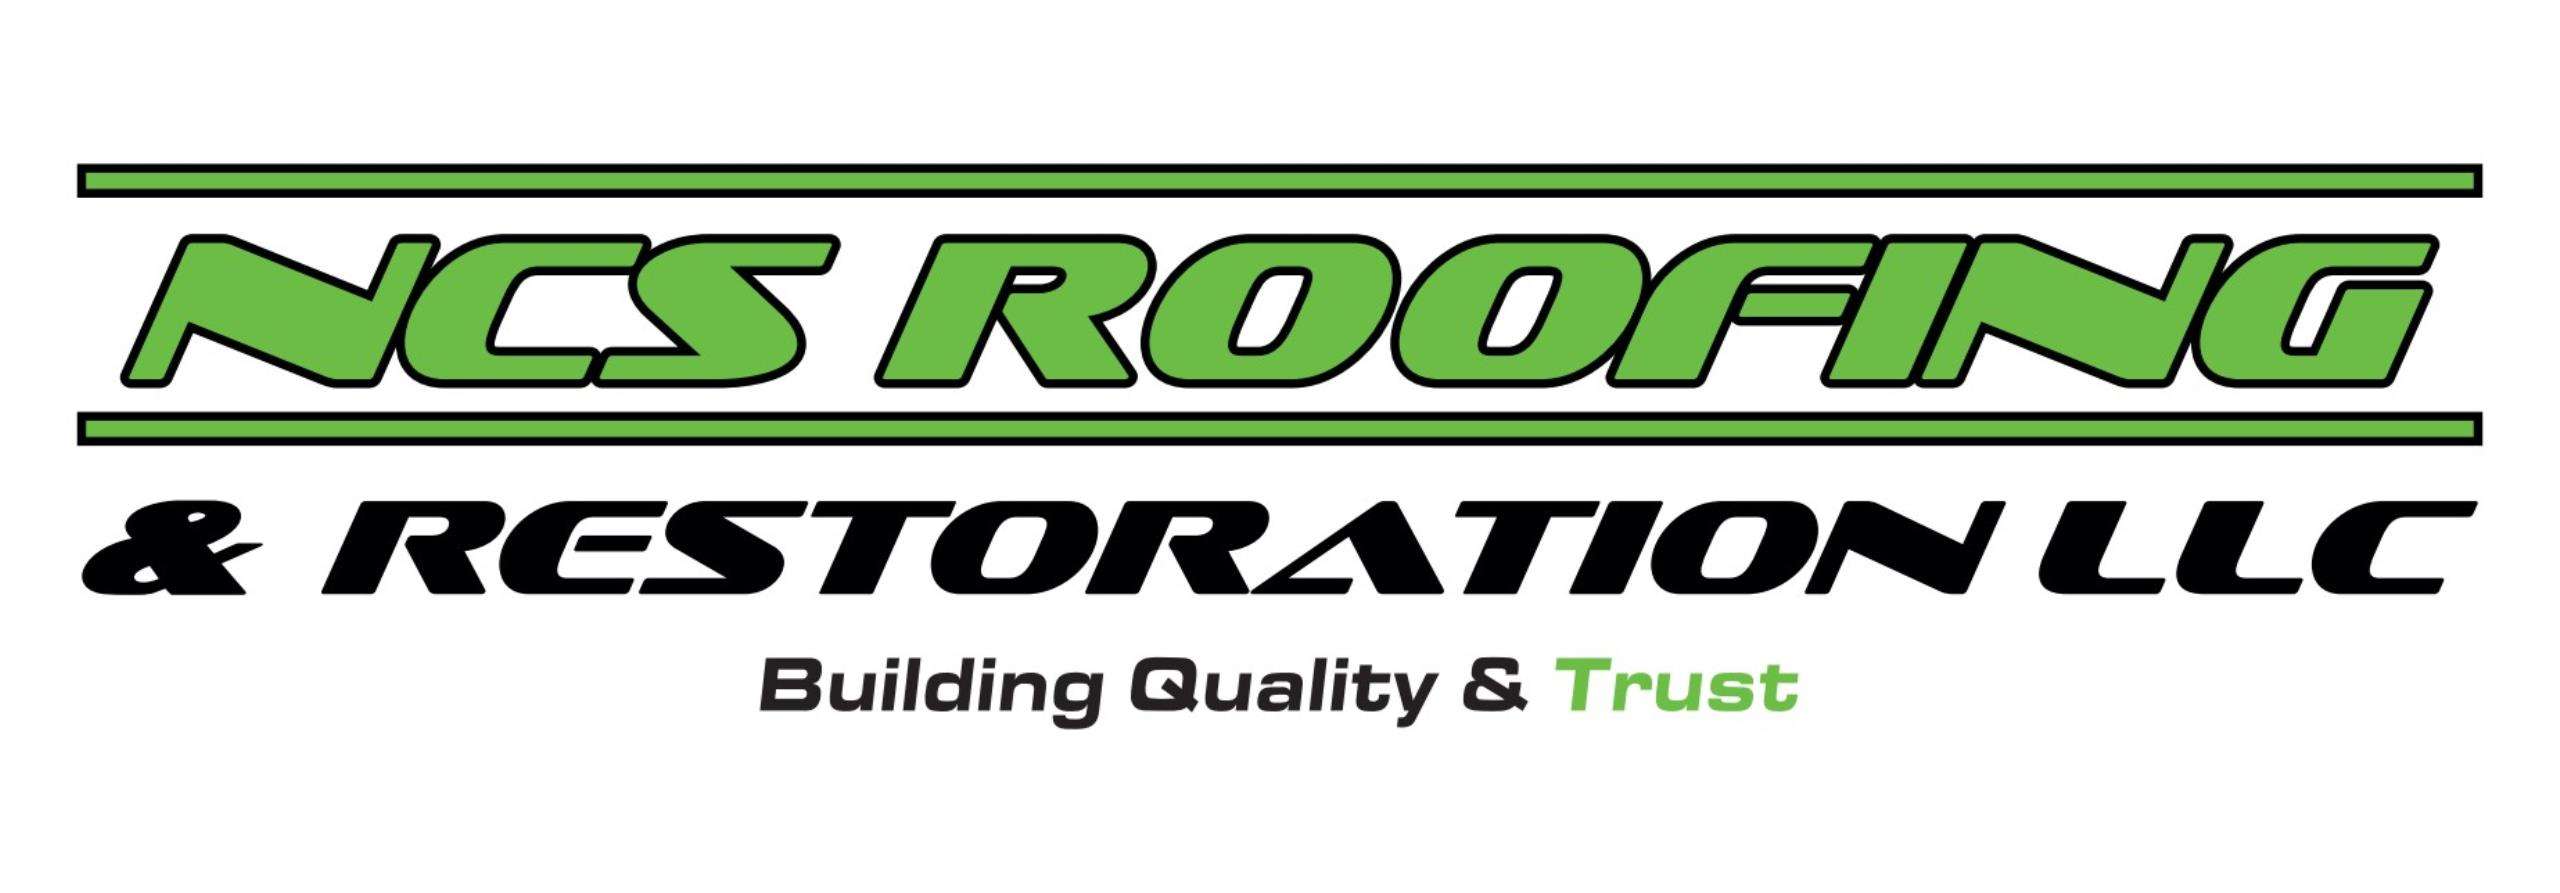 NCS Roofing & Restoration, LLC Logo